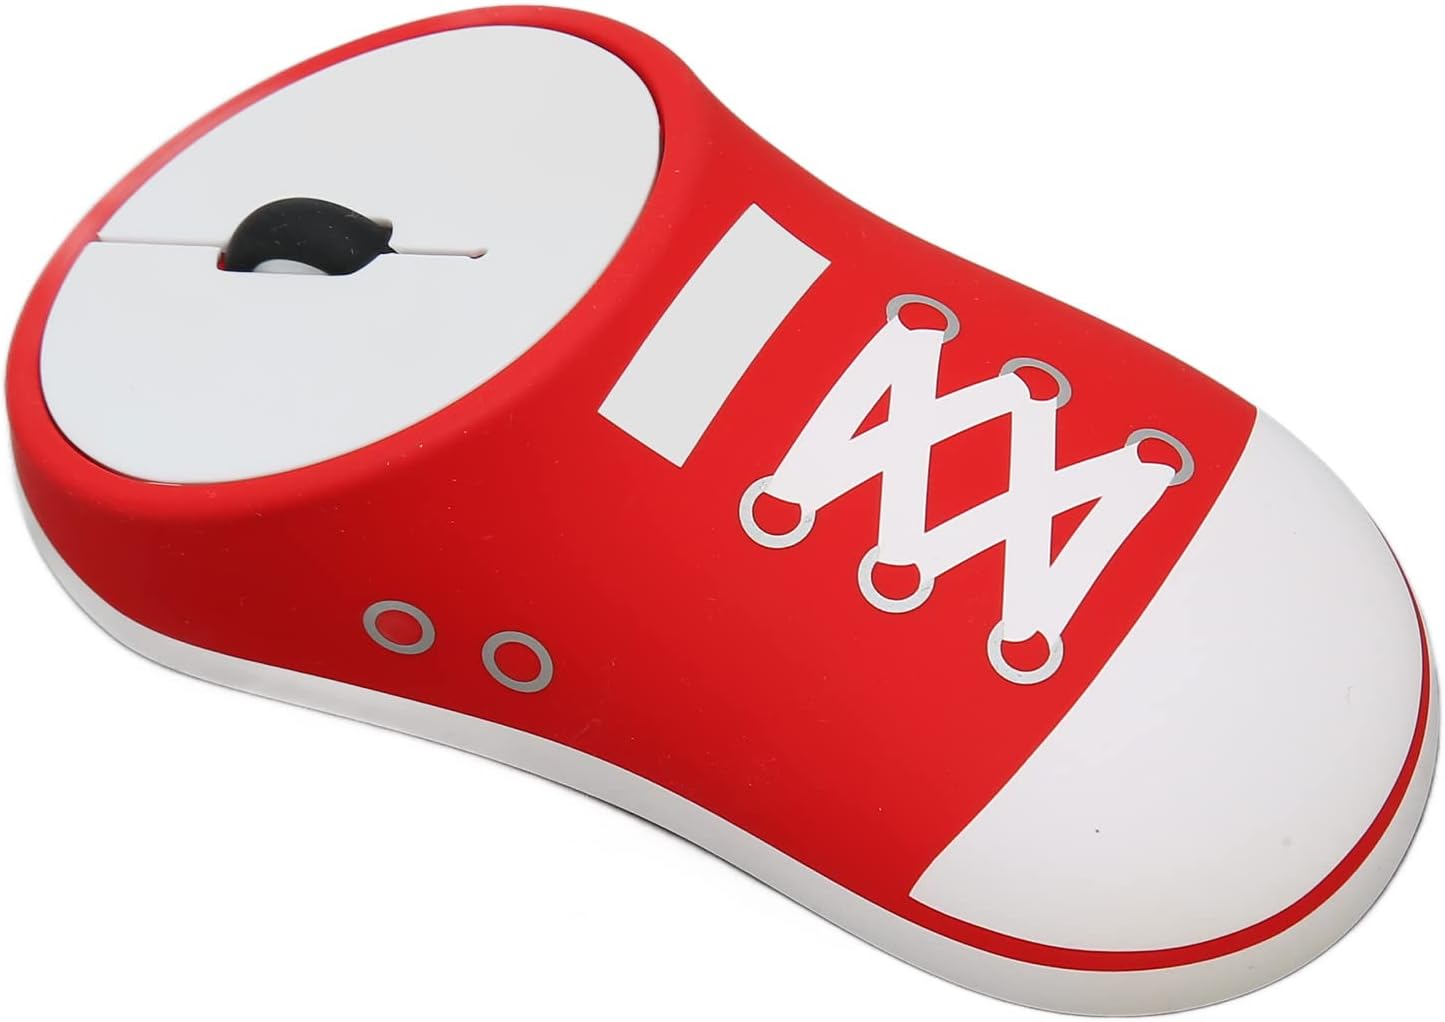 VBESTLIFE Shoe Shape Wireless Mouse, Portable Cute [...]